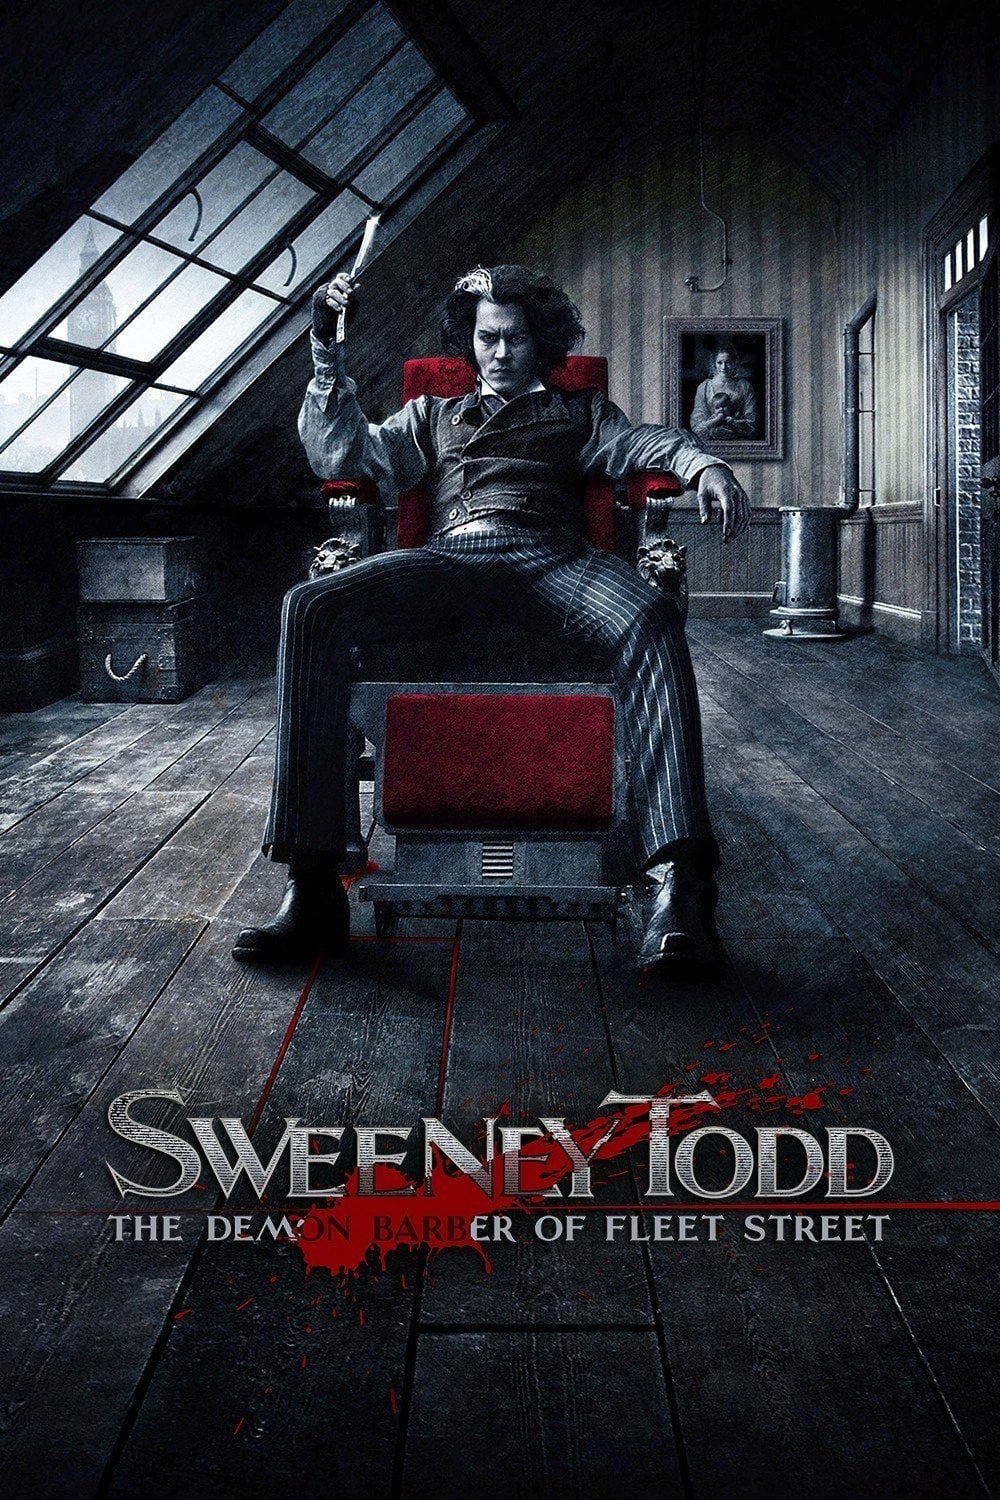 Sweeney Todd: O Barbeiro Demoníaco da Rua Fleet